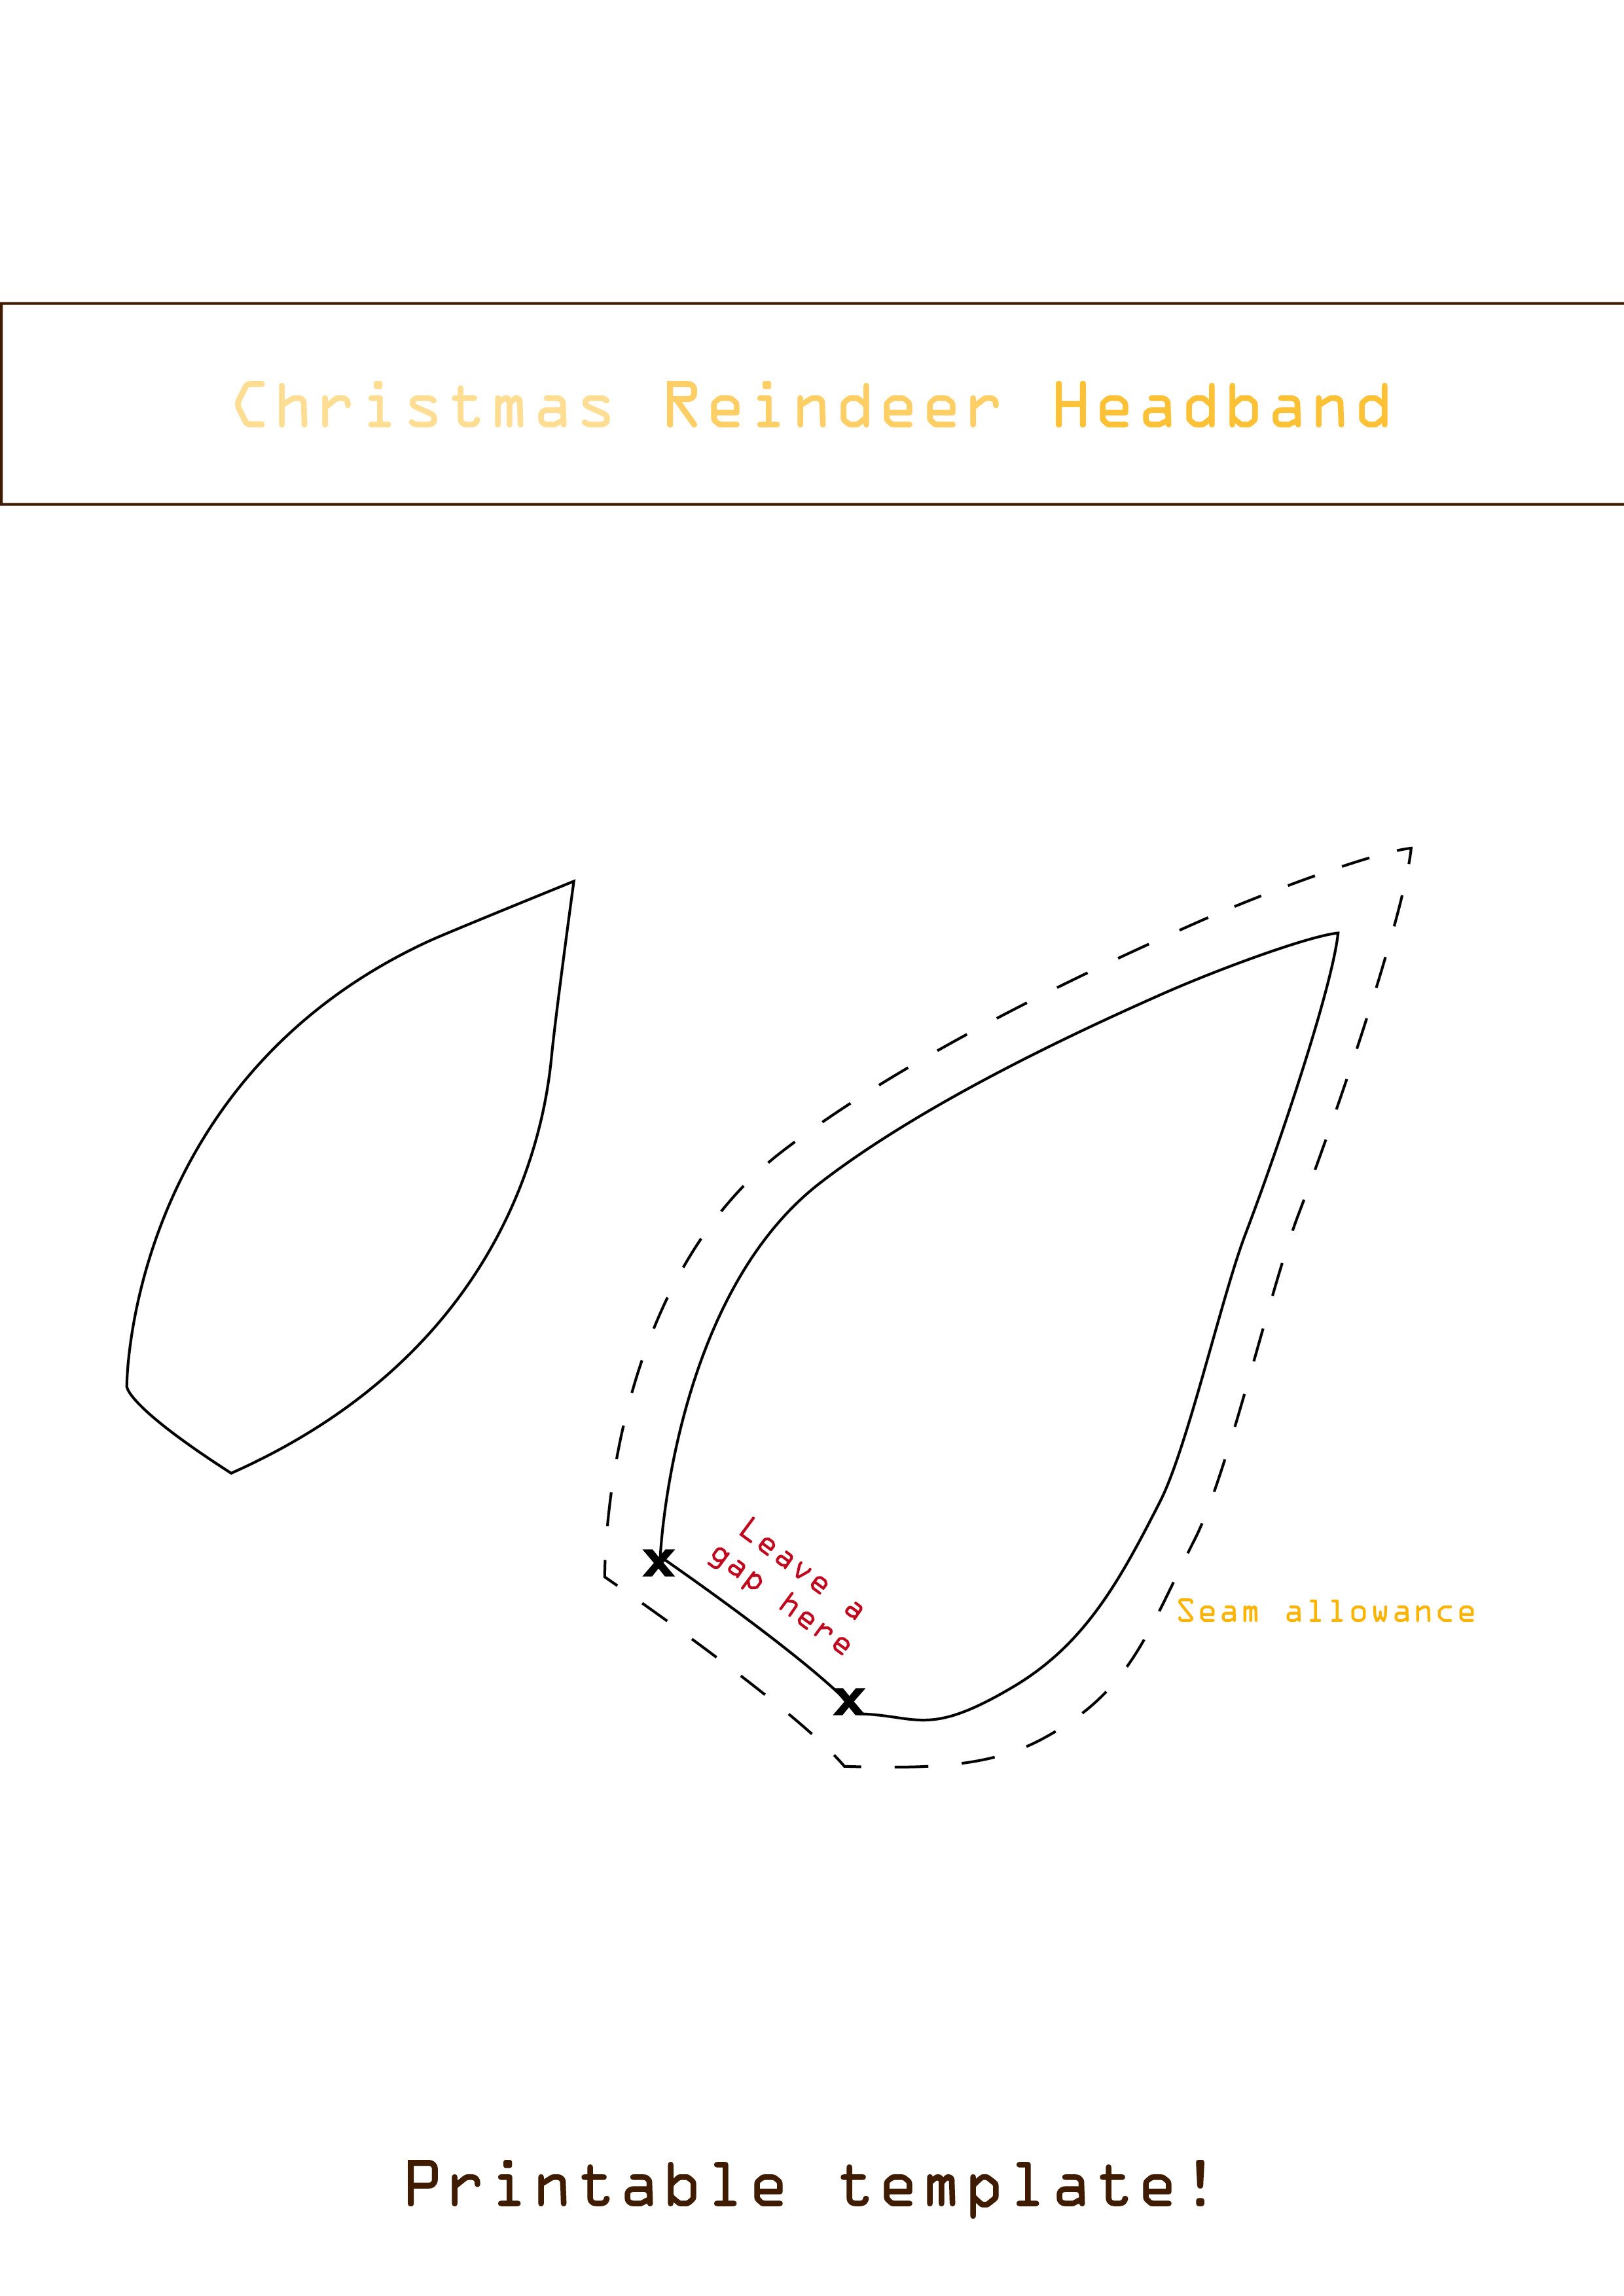 Easy DIY Christmas reindeer headband for your baby